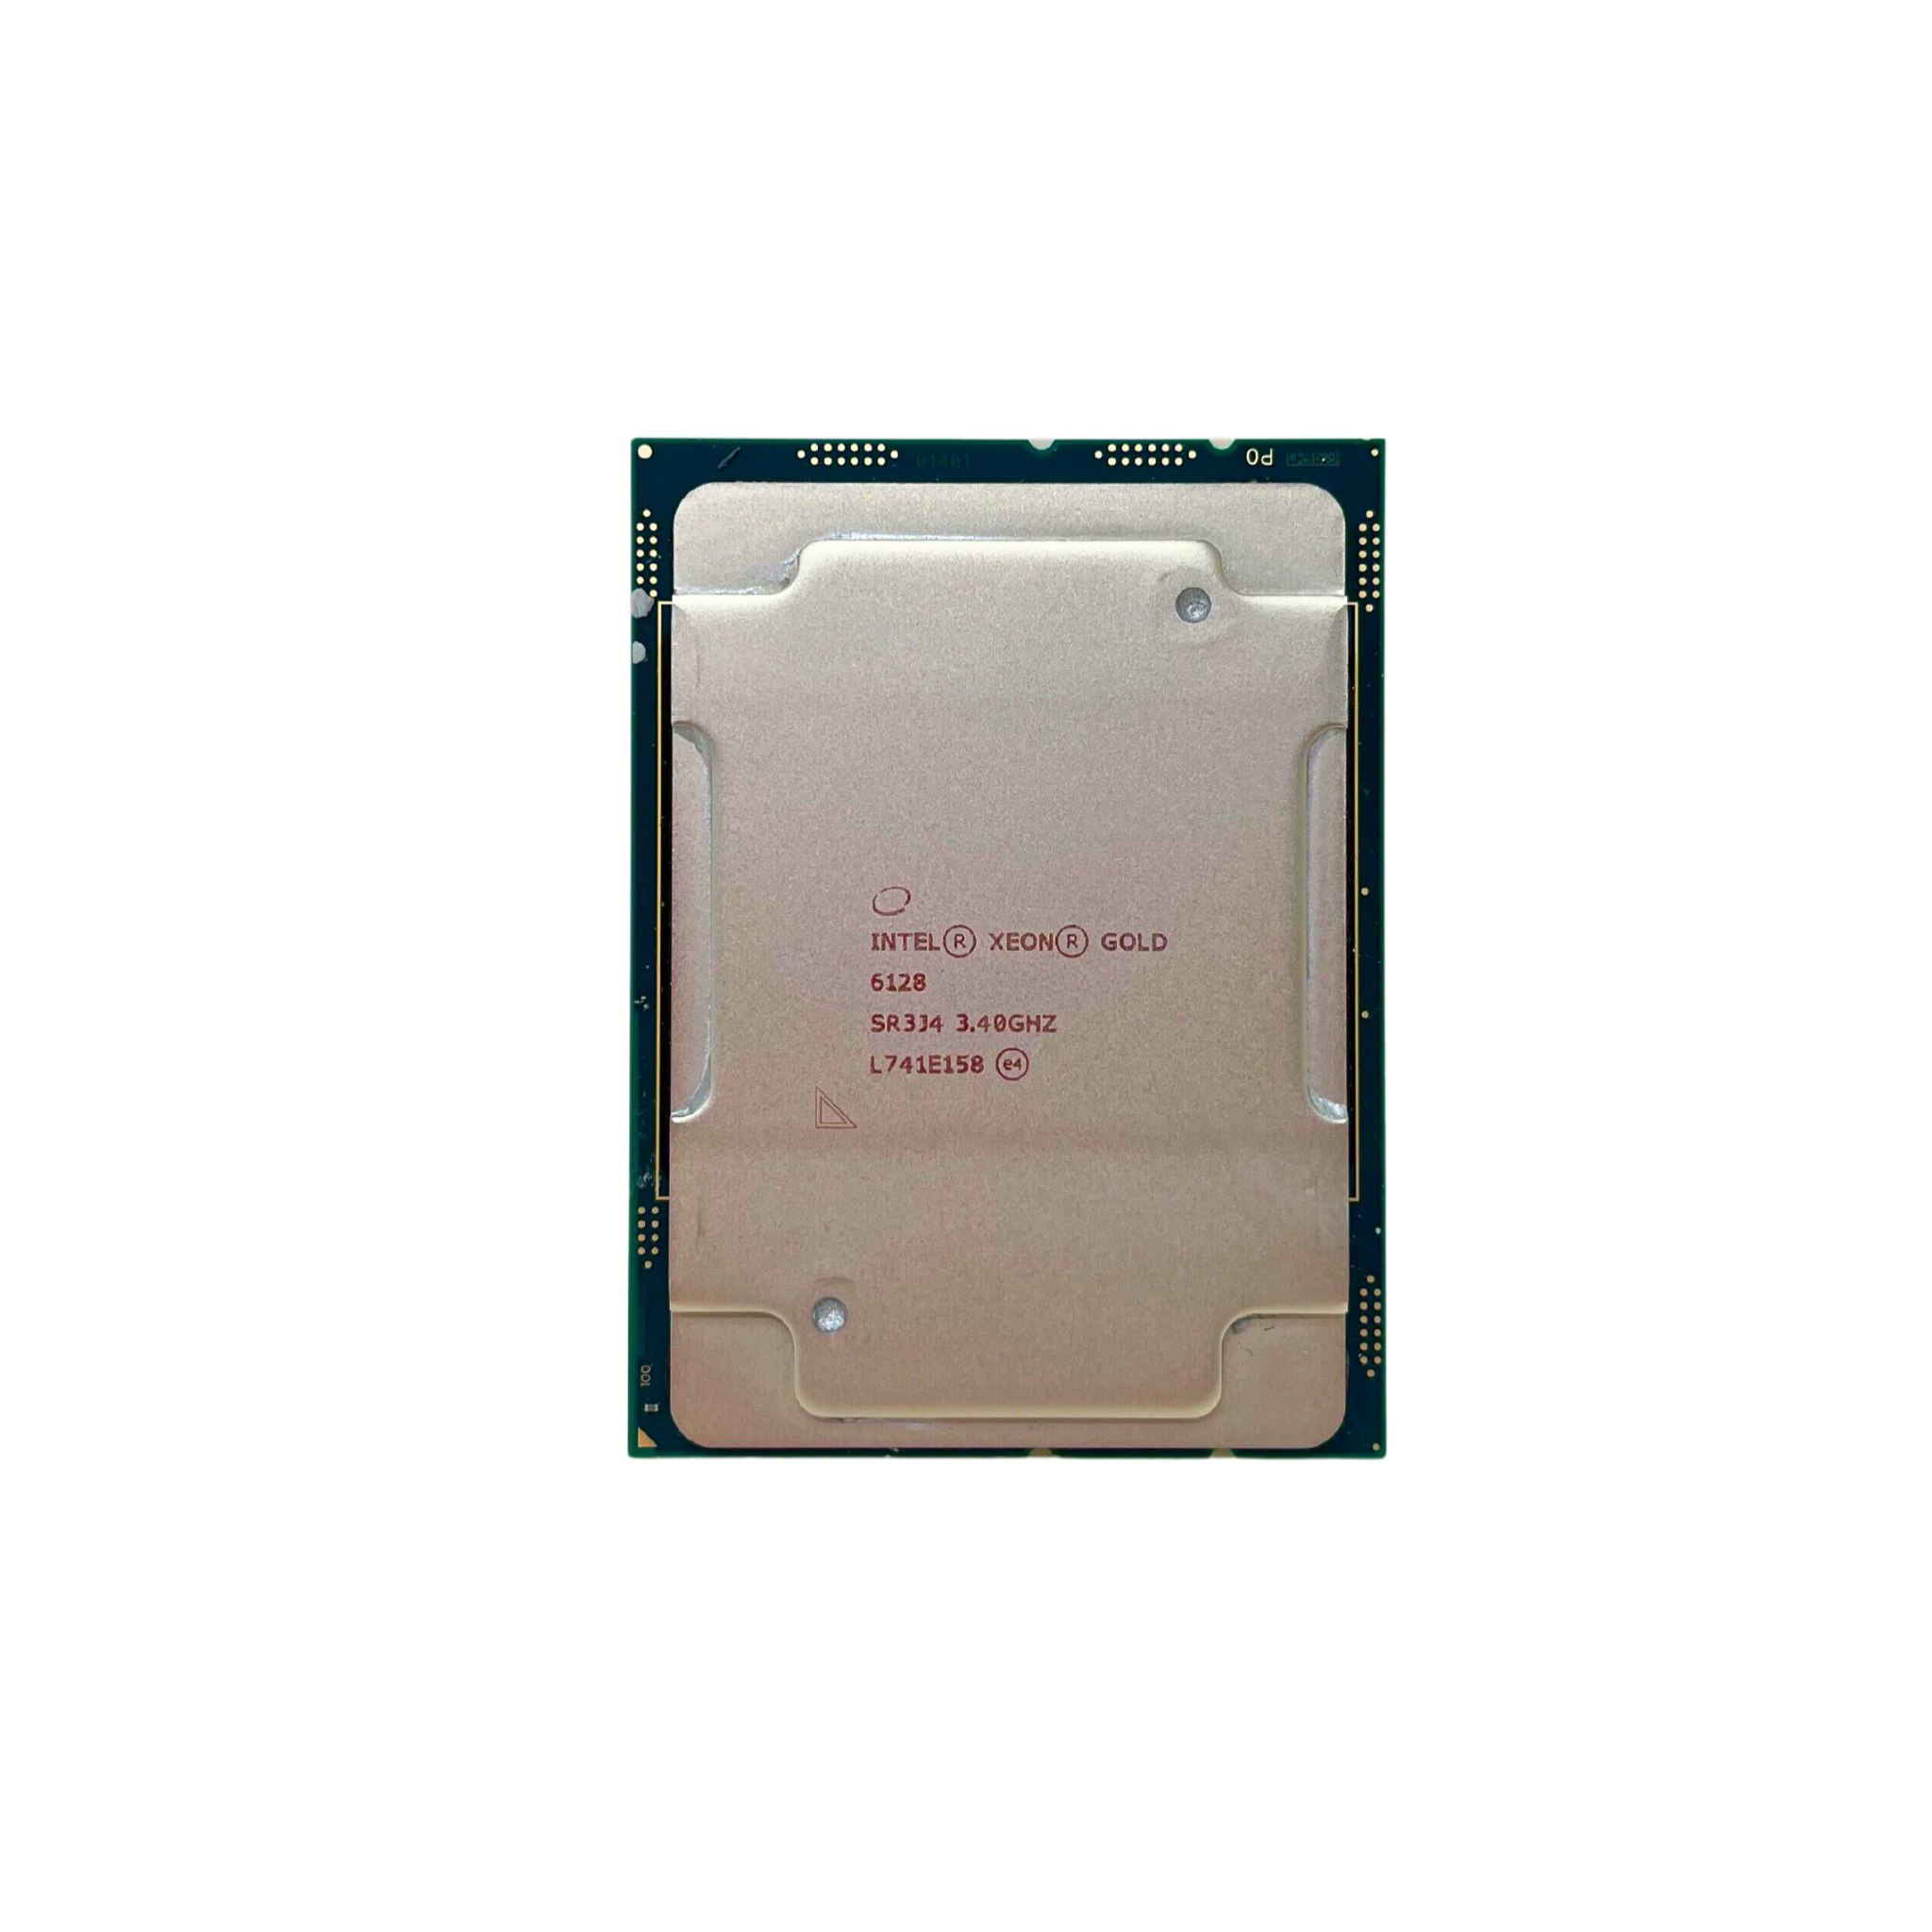 Intel Xeon Gold 6128 SR3J4 3.40ghz 6 Core Socket Fclga3647 Processor (Intel Xeon Gold 6128)